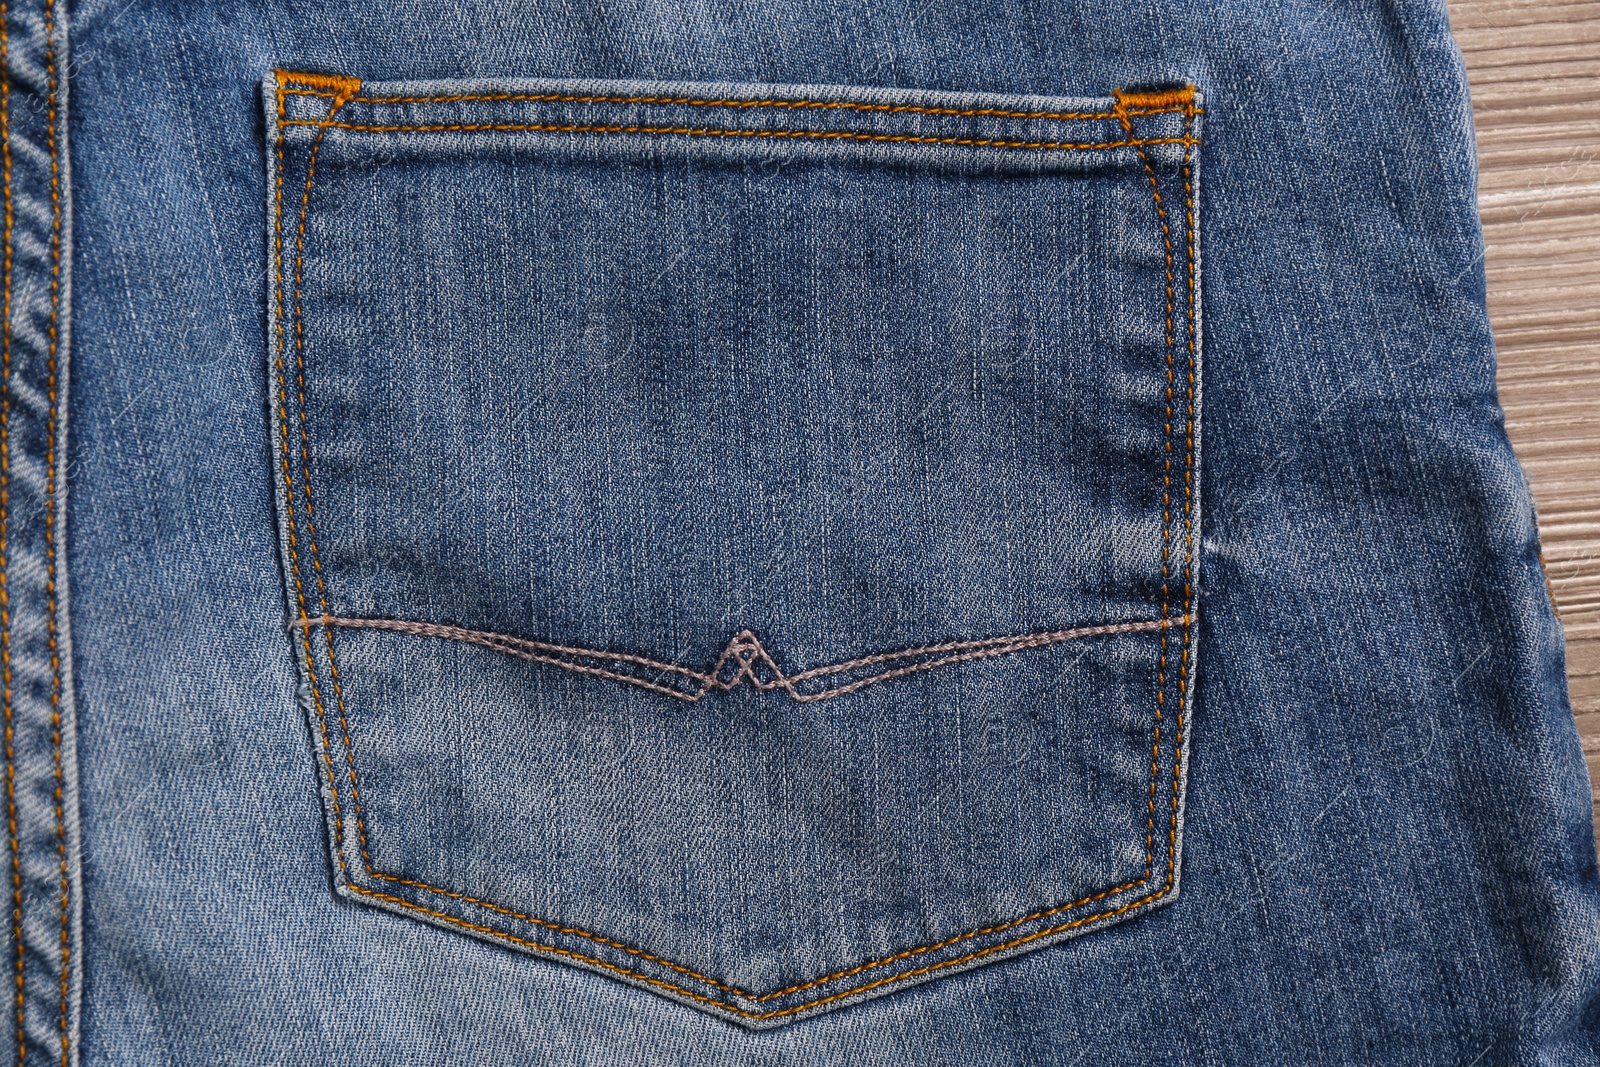 Photo of Stylish light blue jeans on wooden background, closeup of back pocket